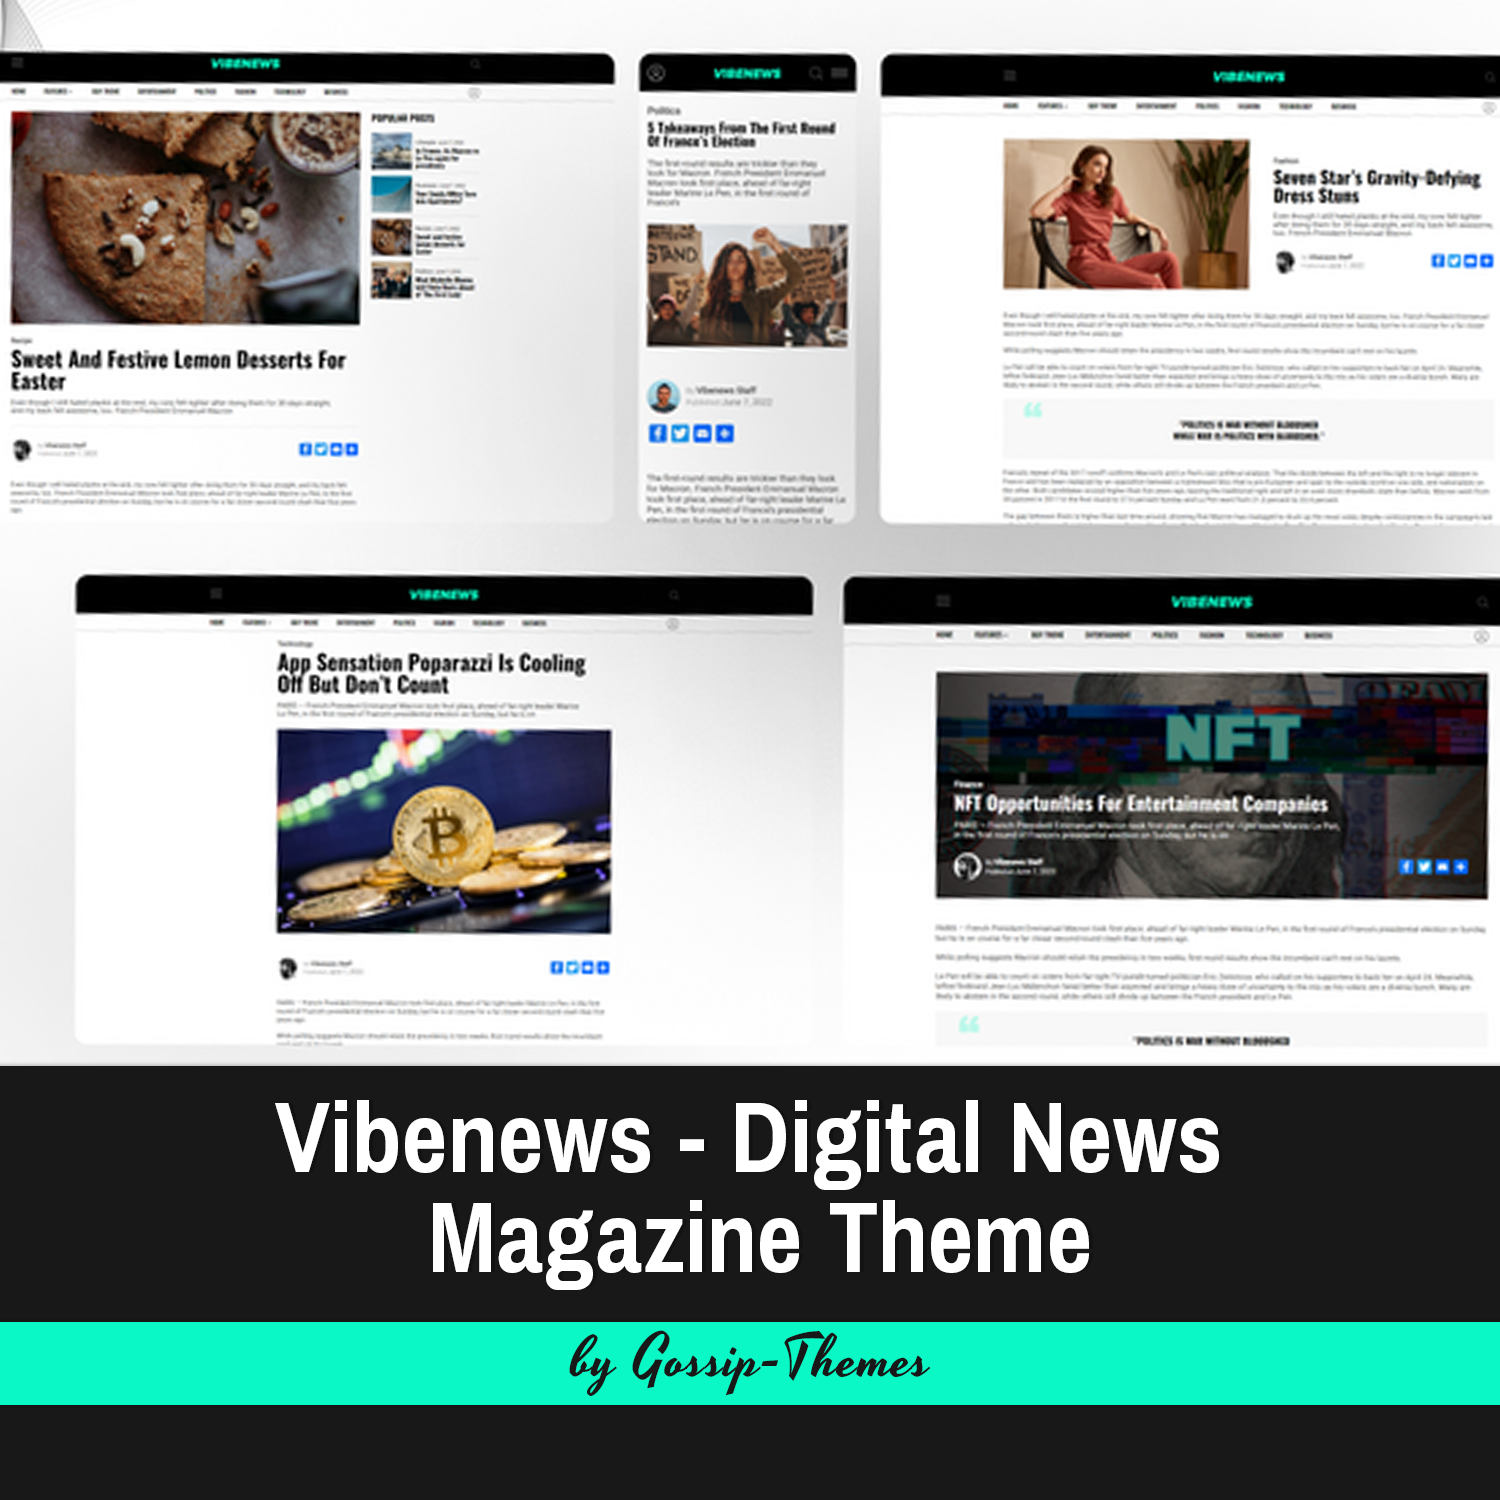 Images with vibenews digital news magazine theme.